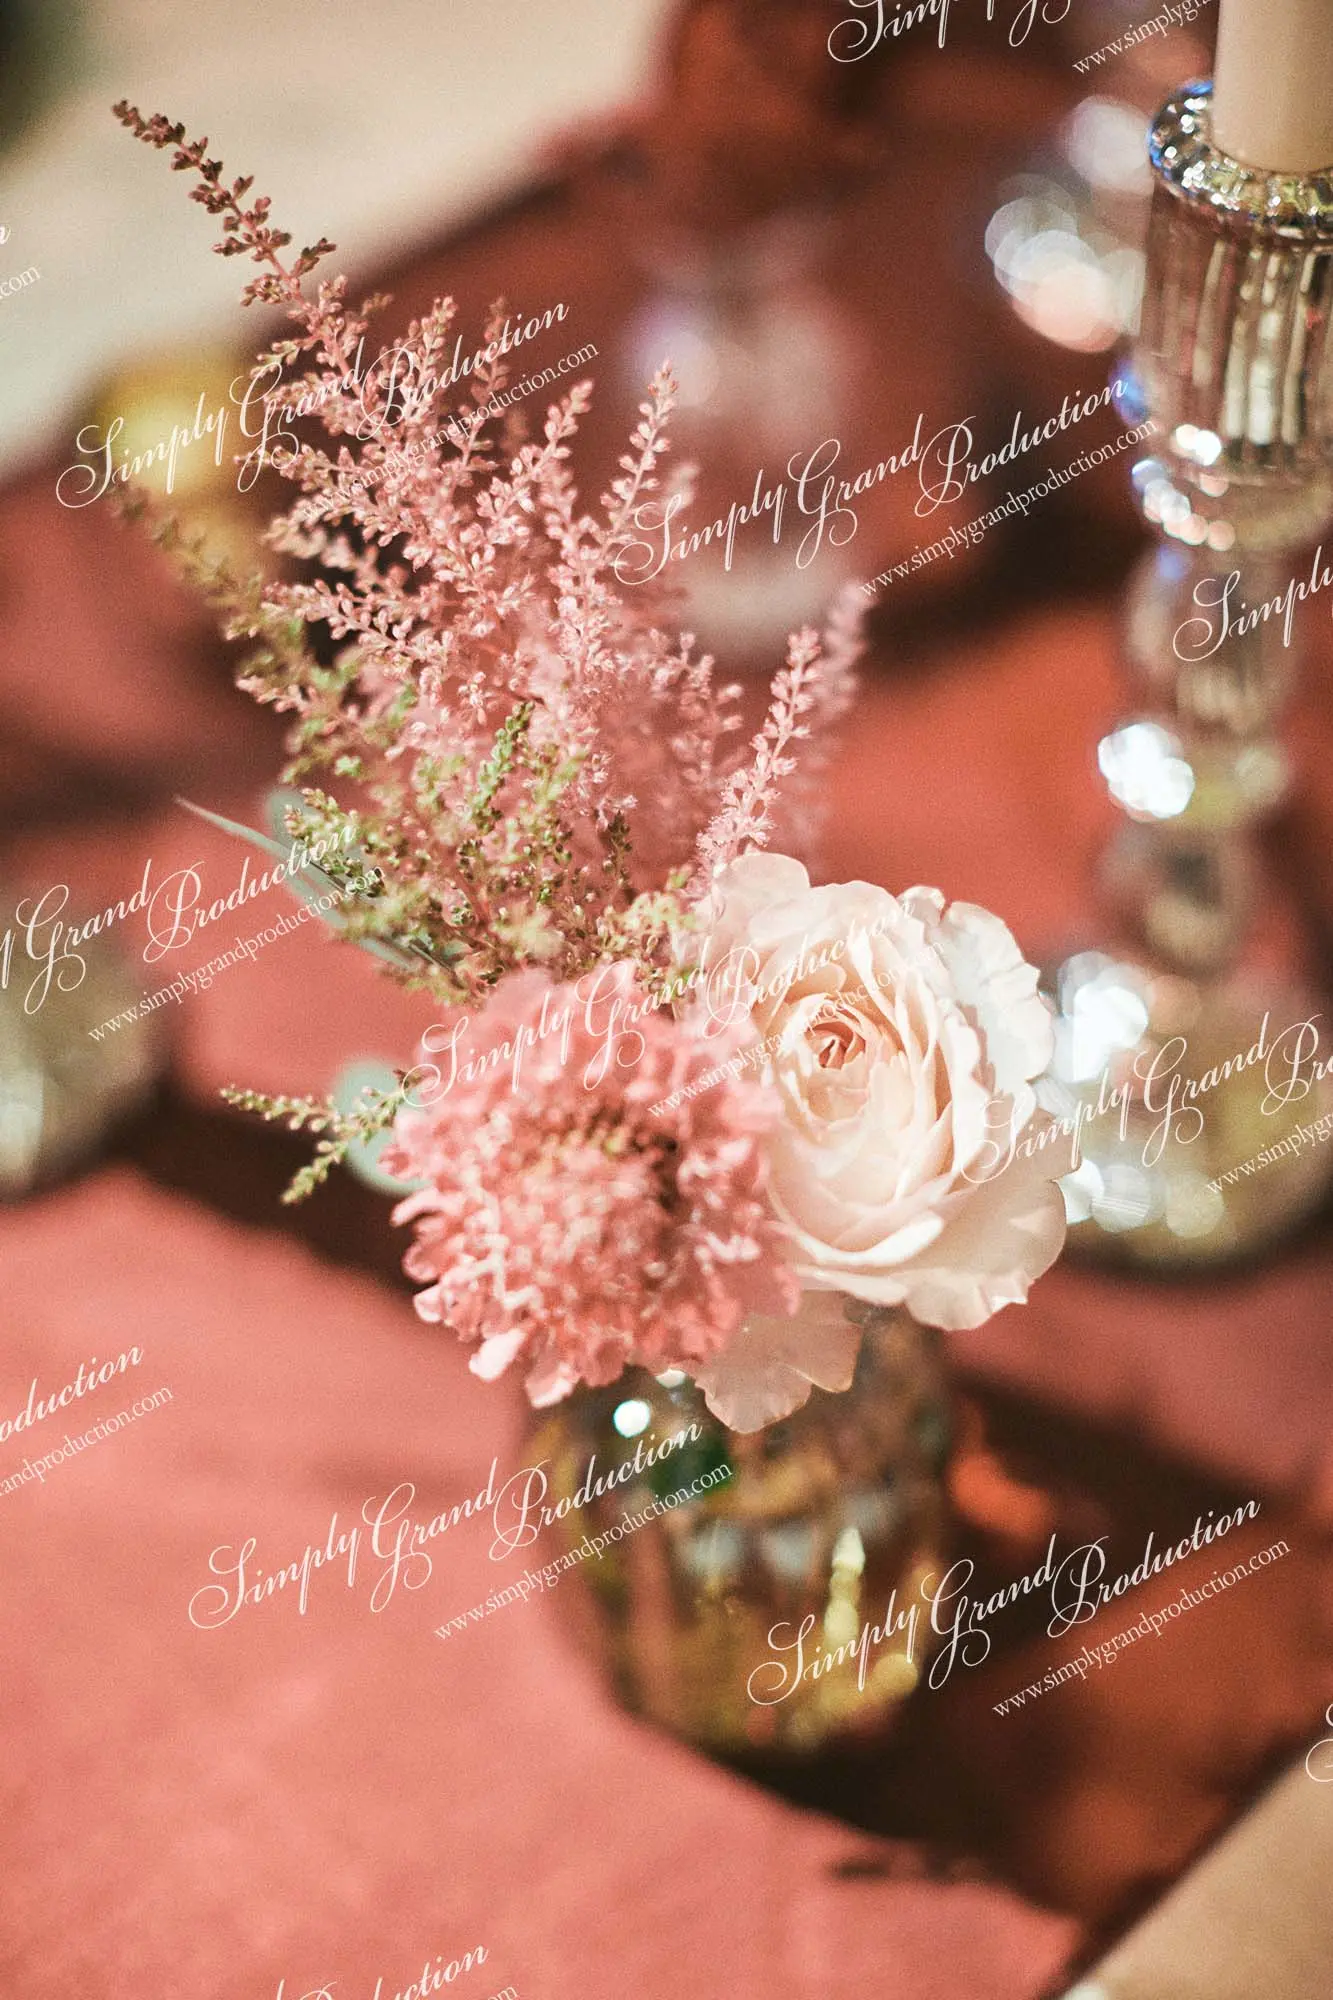 Simply_Grand_Production_Ballroom_wedding_decoration_RECEPTION_burgundy_pink_ivory_plant_vase_classic_1_4_wm